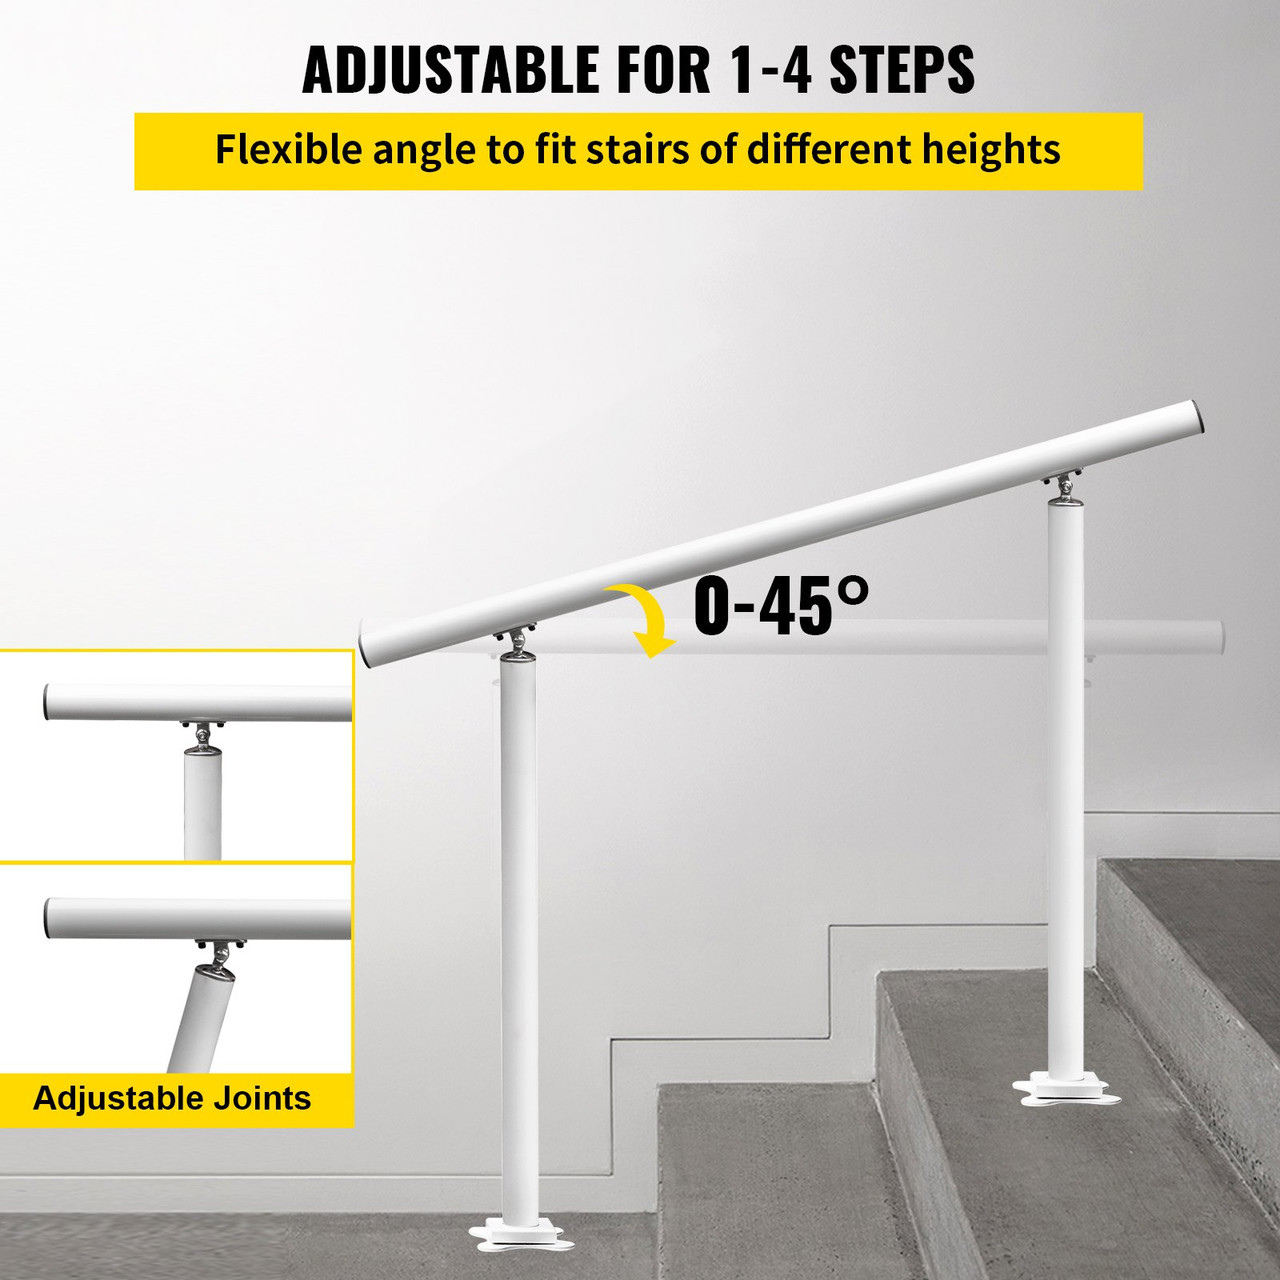 Outdoor Stair Railing Kit, 4 FT Handrails 1-4 Steps, Adjustable Angle White Aluminum Stair Hand Rail for The Elderly, Handrails for Outdoor Steps